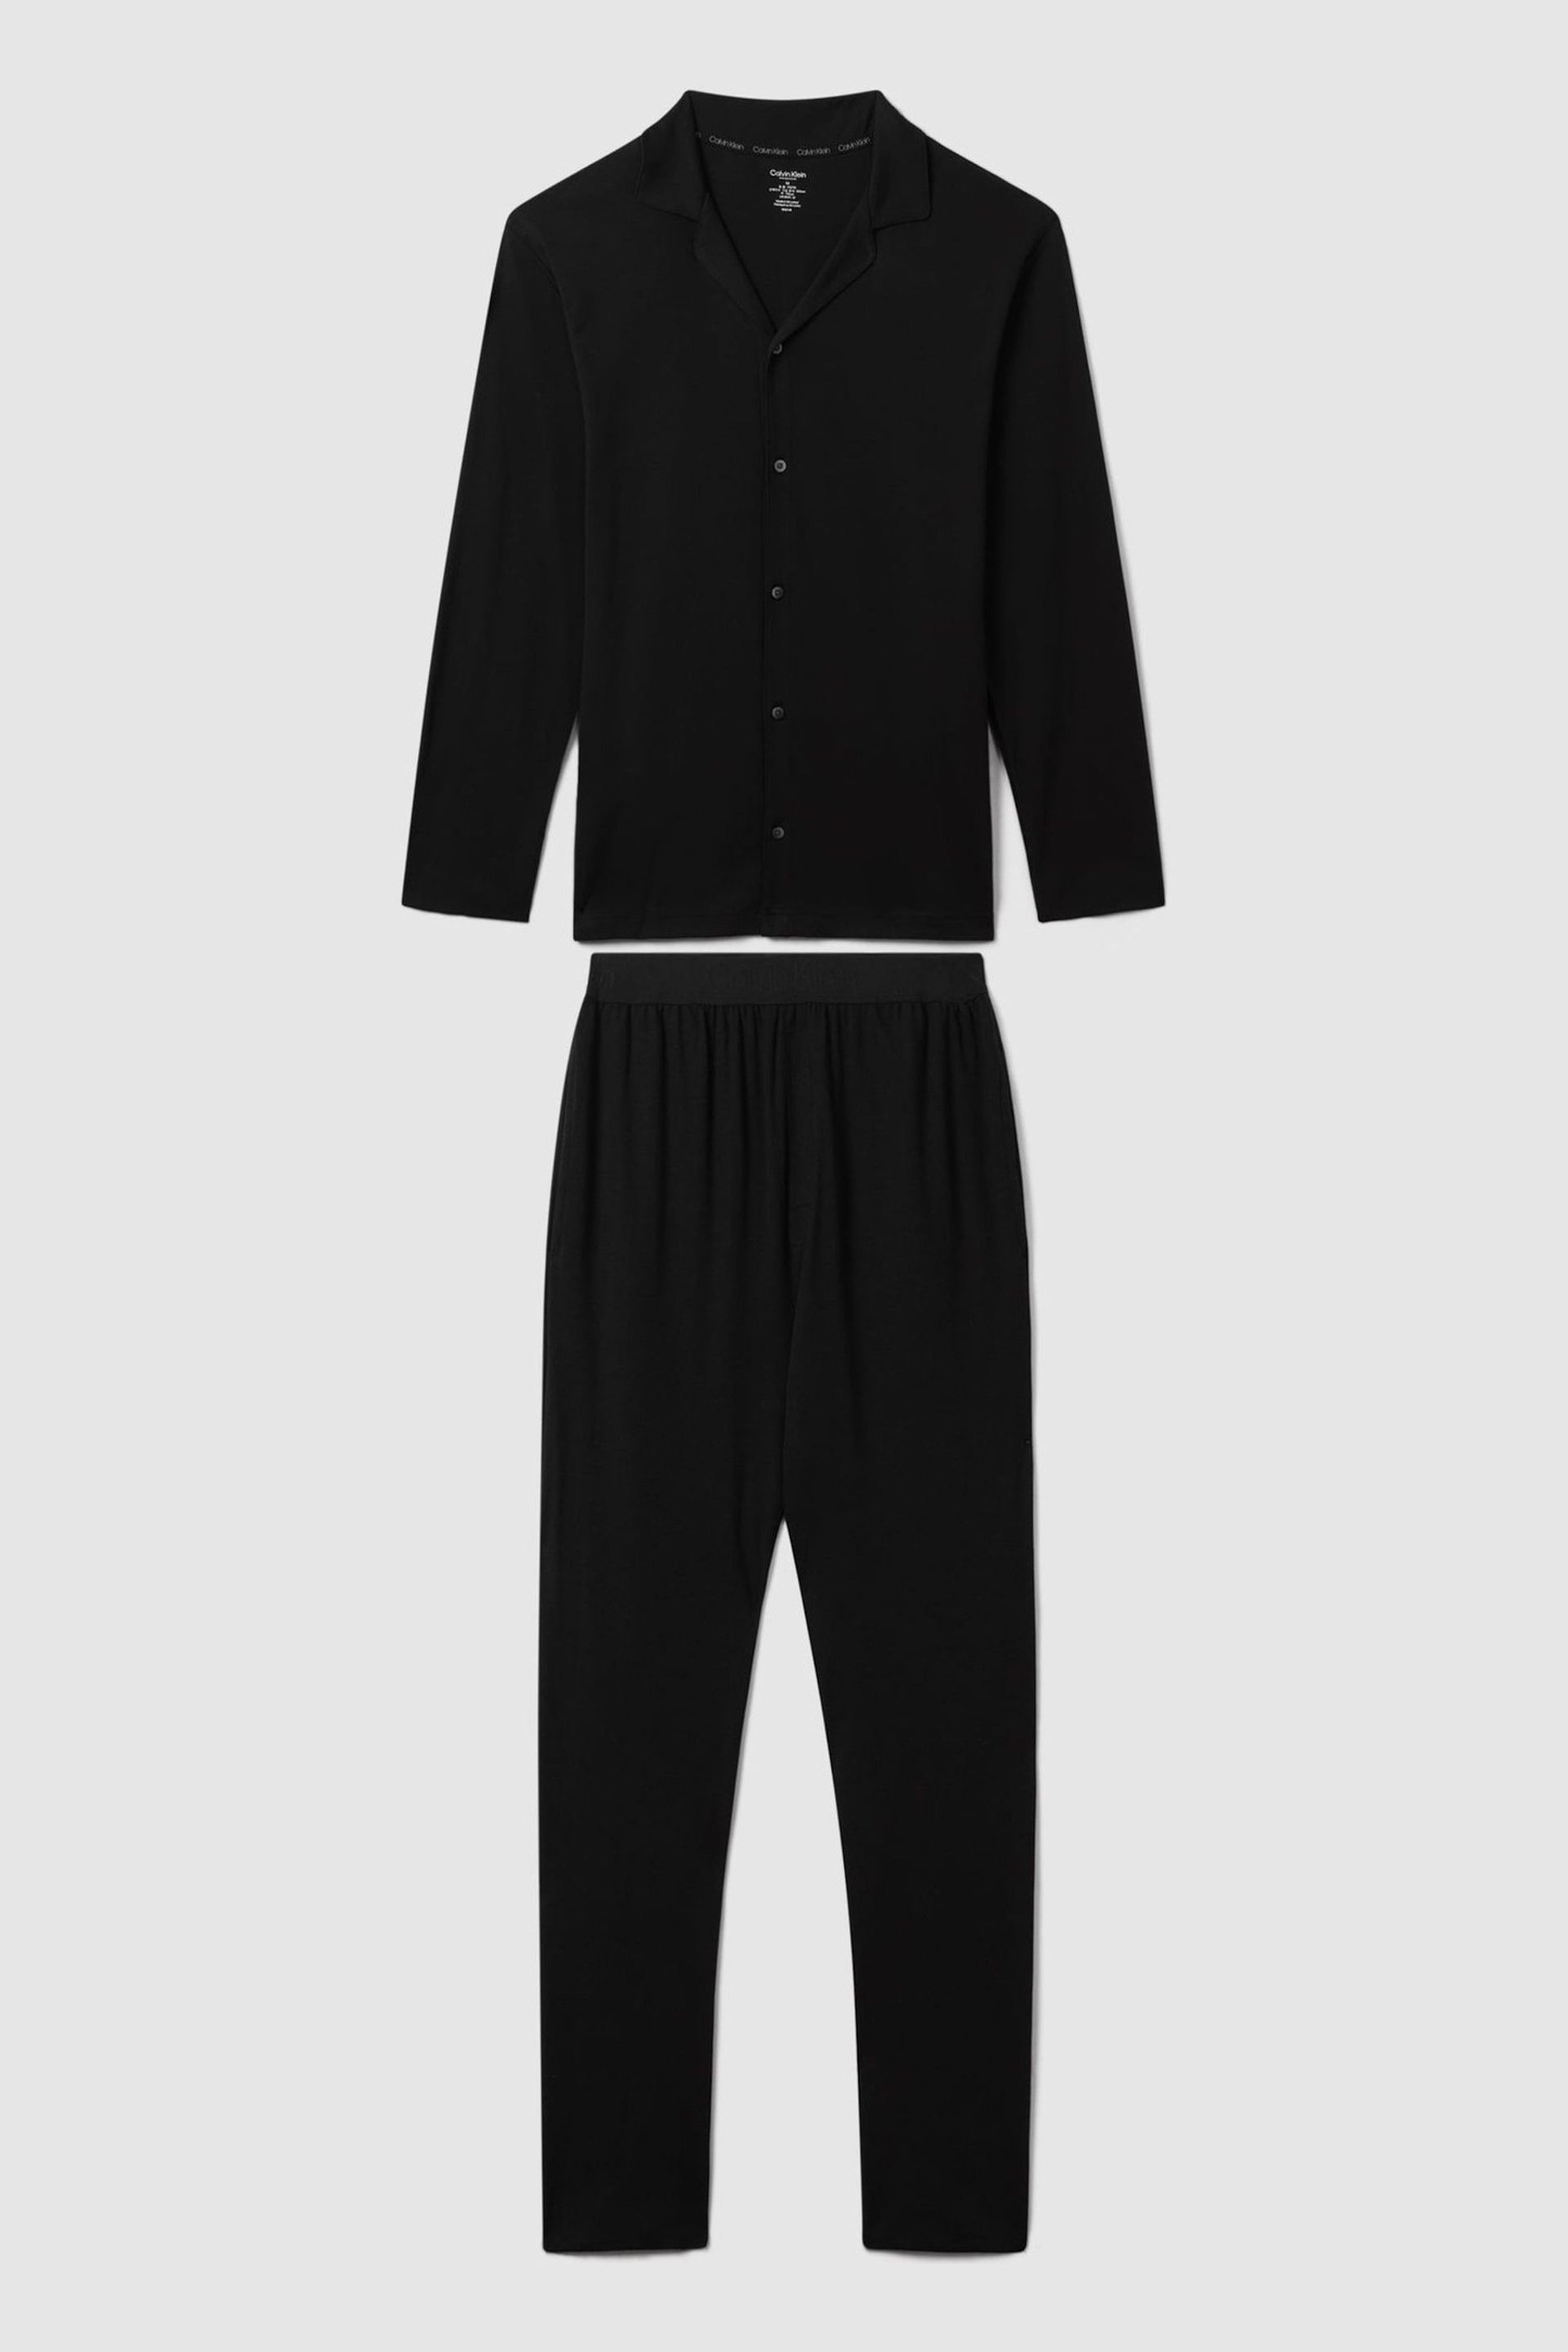 Calvin Klein Black Underwear Pyjama Set - Image 6 of 8